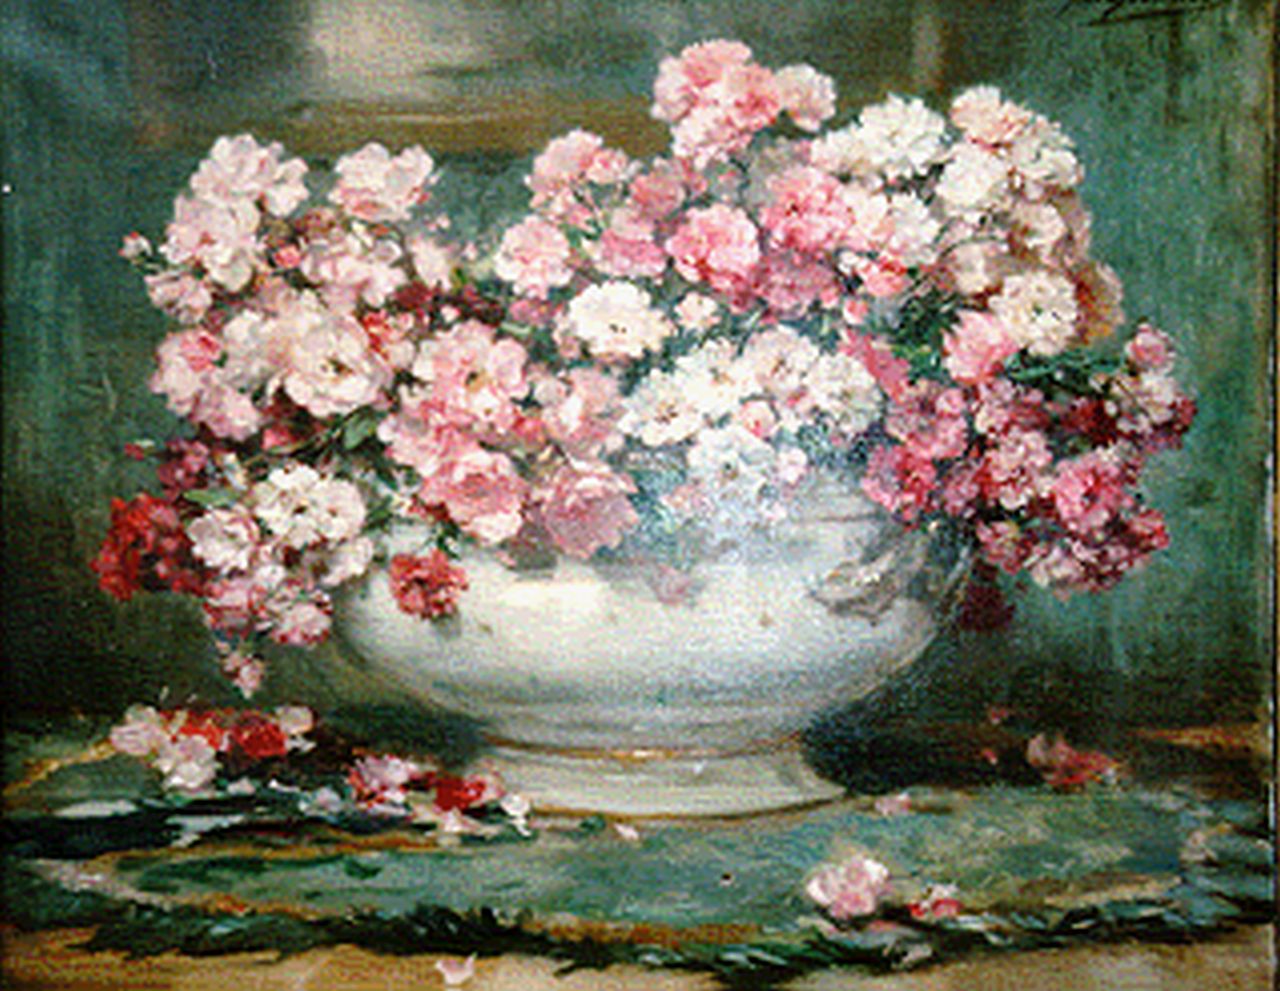 Gouweloos J.L.H.  | 'Jean' Léon Henri Gouweloos, A Flower Still life, oil on canvas 65.3 x 81.0 cm, signed u.r.